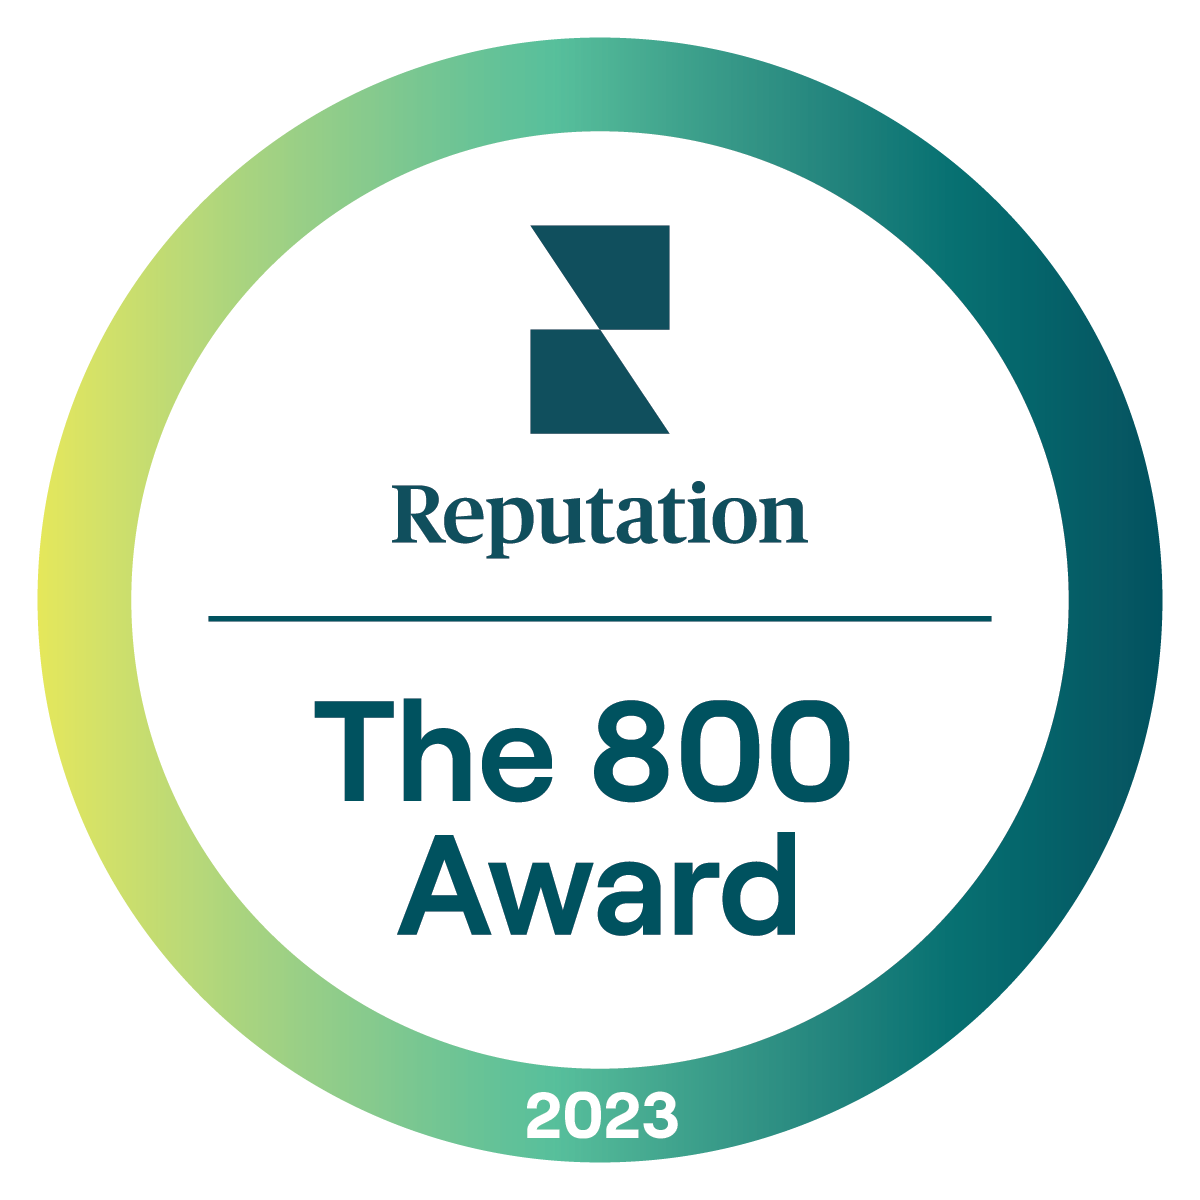 Reputation The 800 Award